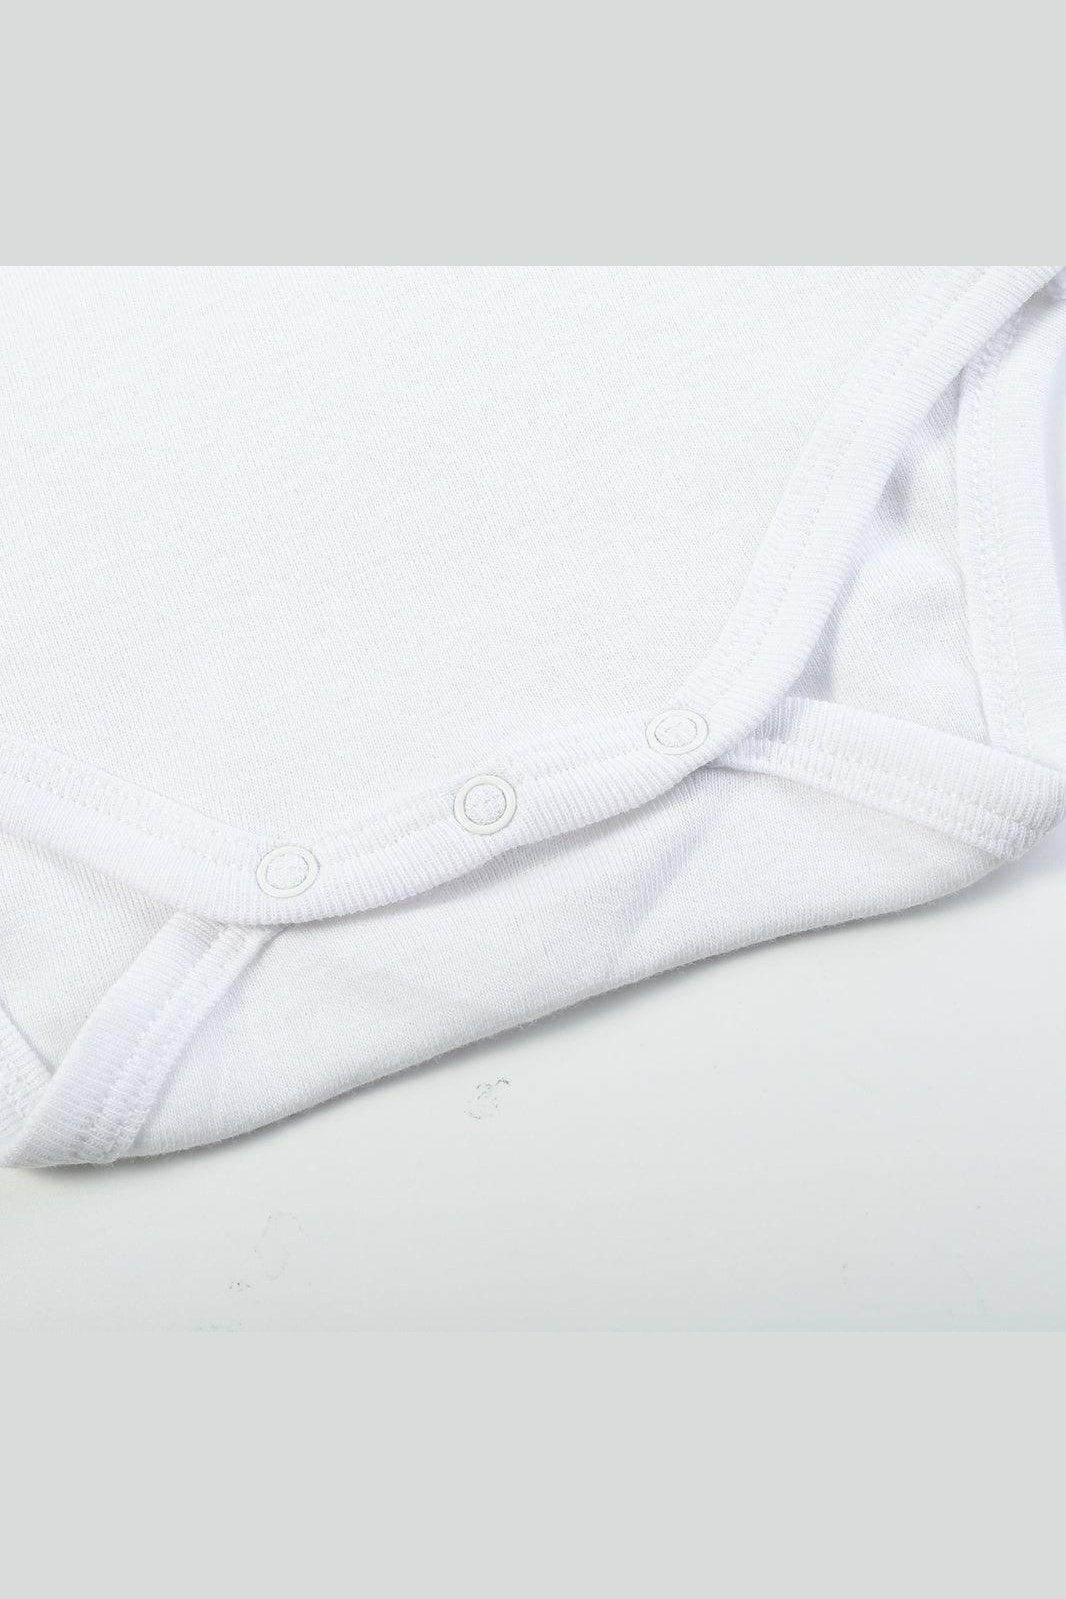 OBAIBI - מארז 3 בגדי גוף בצבע לבן - MASHBIR//365